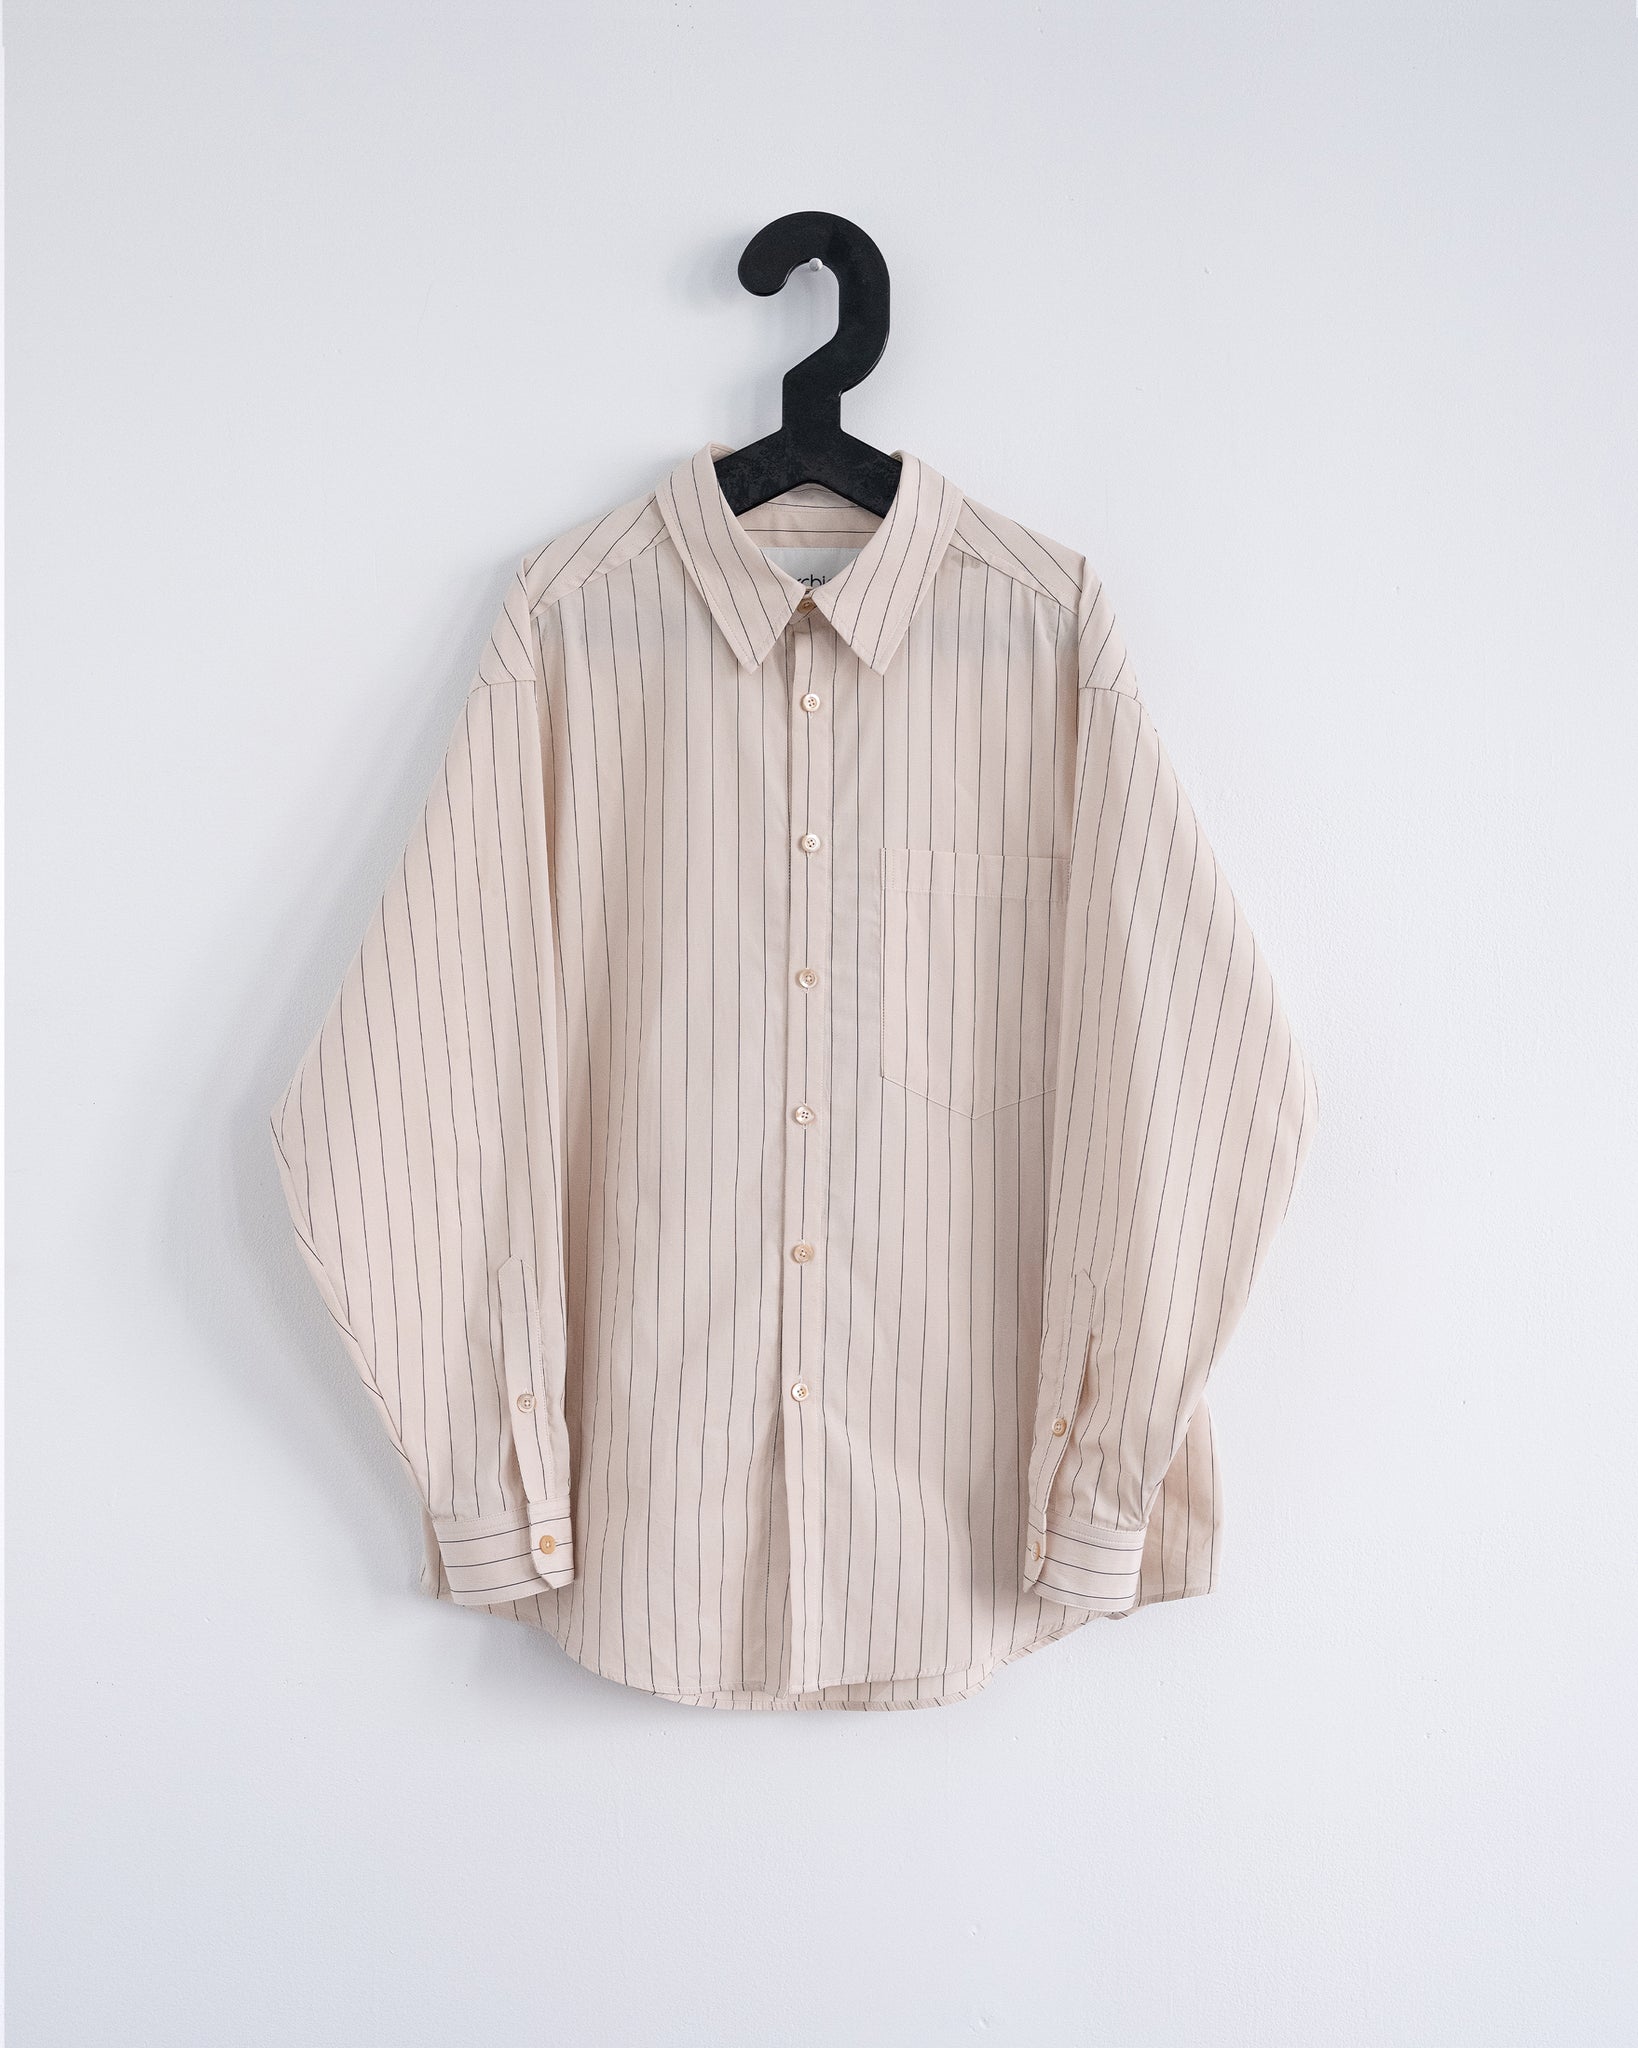 Sunday Shirt, Grey Pin Stripe